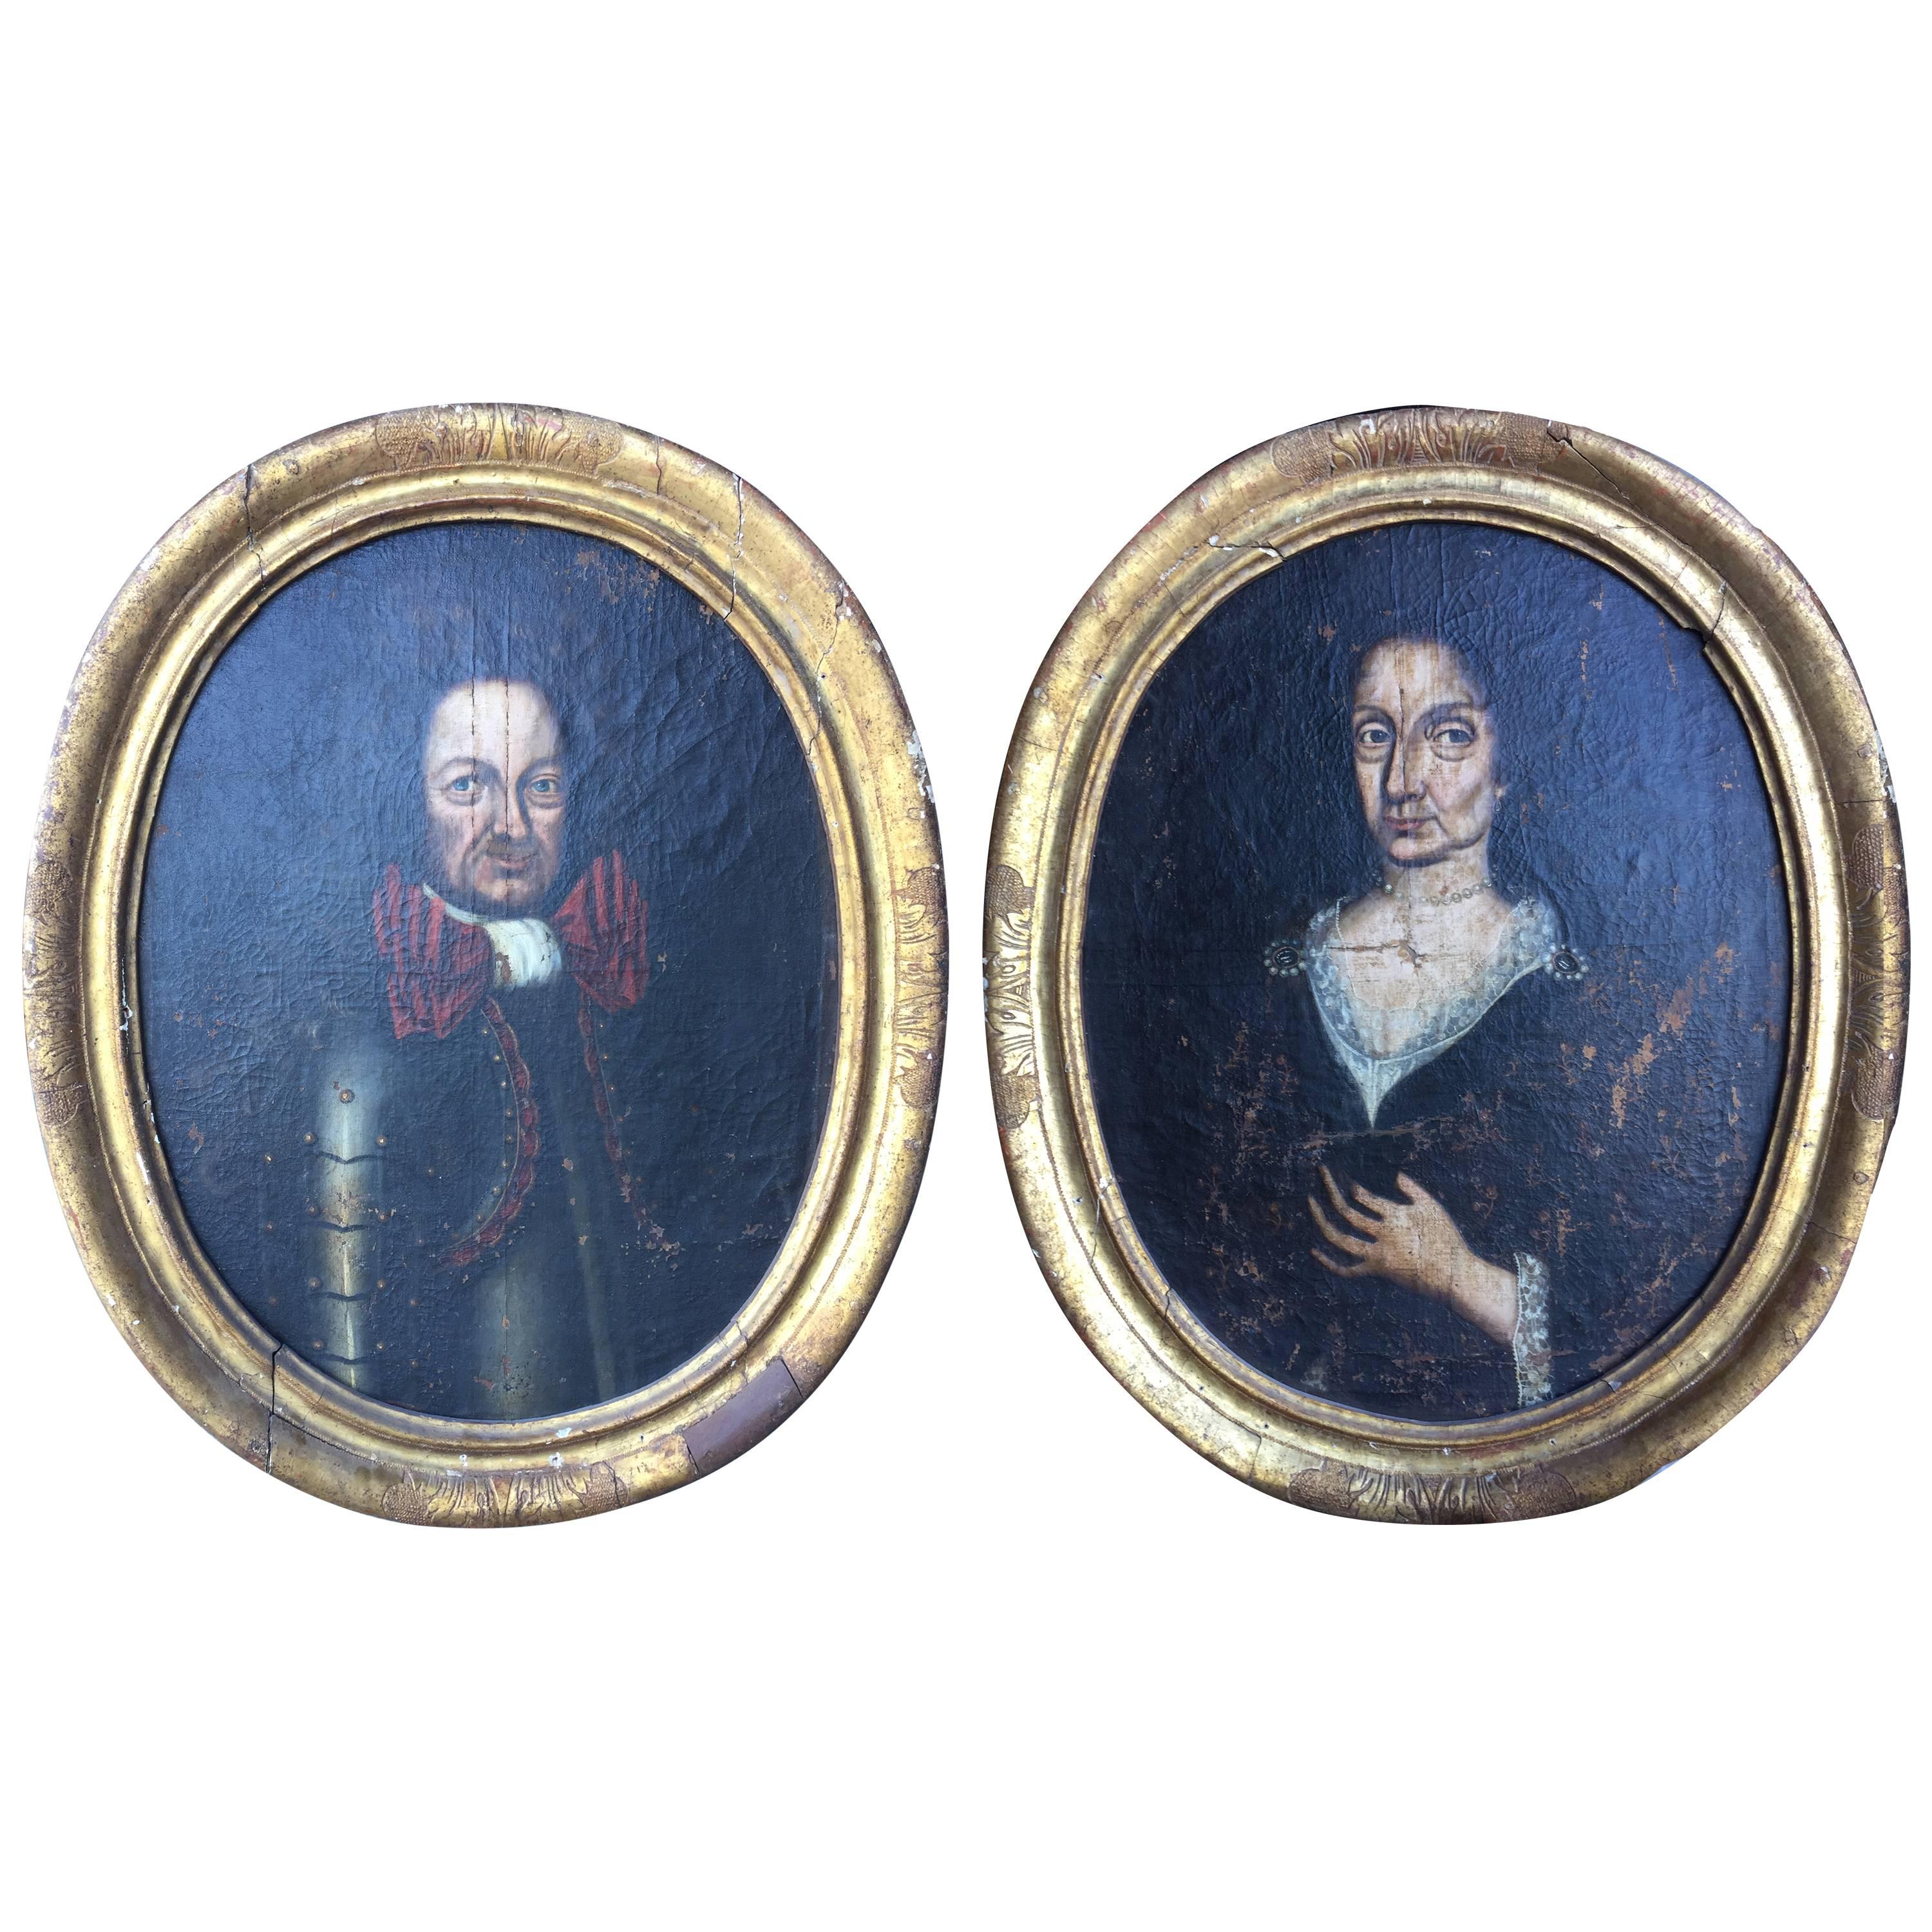 Pair of Vintage Framed Portraits, c. 19th Century